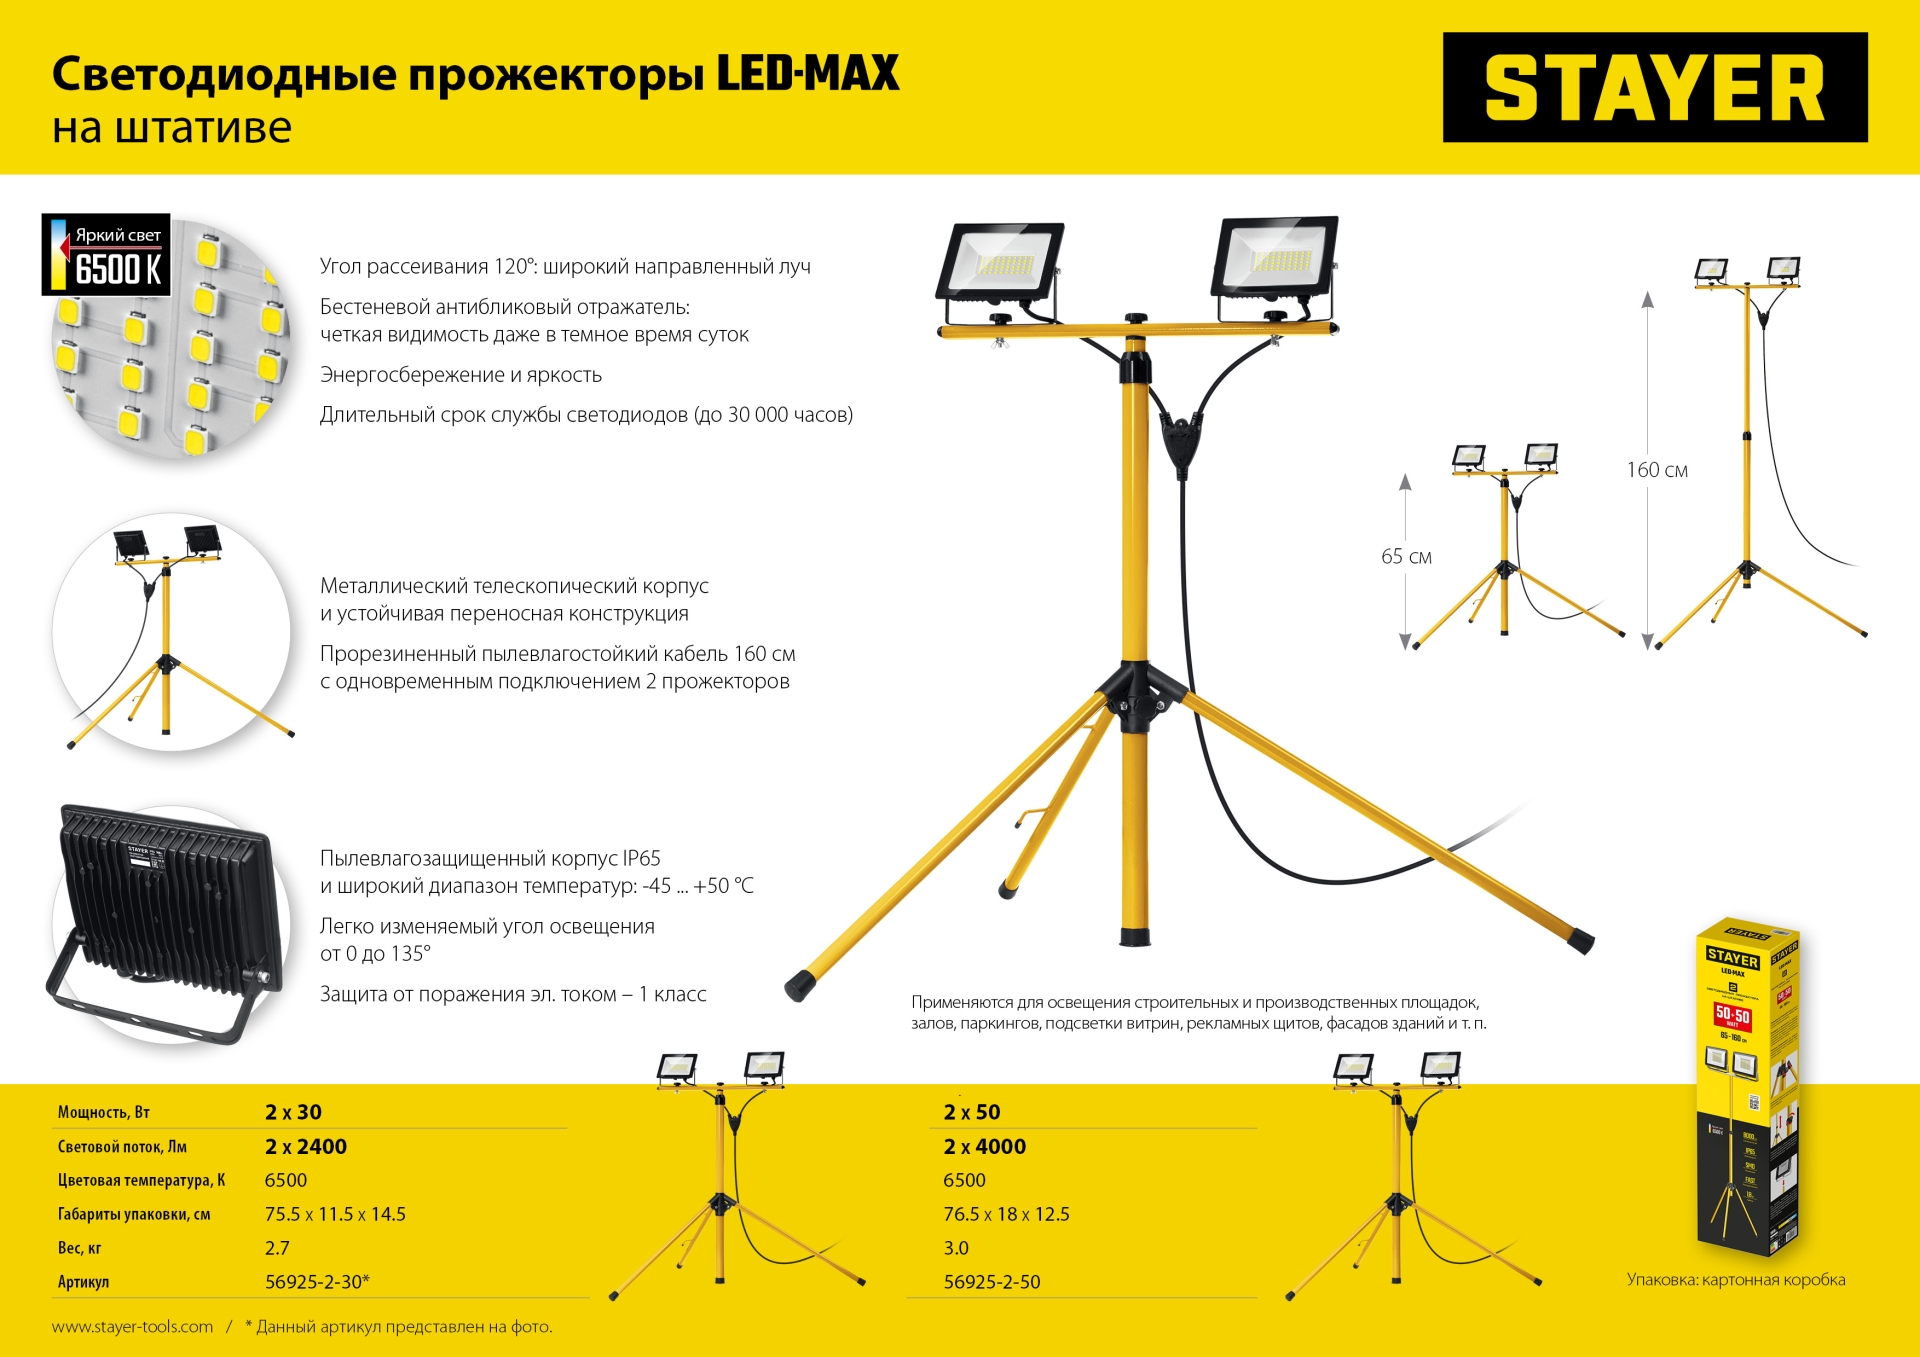 STAYER LED-MAX, 2 х 30 Вт, 6500 К, IP 65, 1.6 м, светодиодные прожекторы на штативе (56925-2-30)